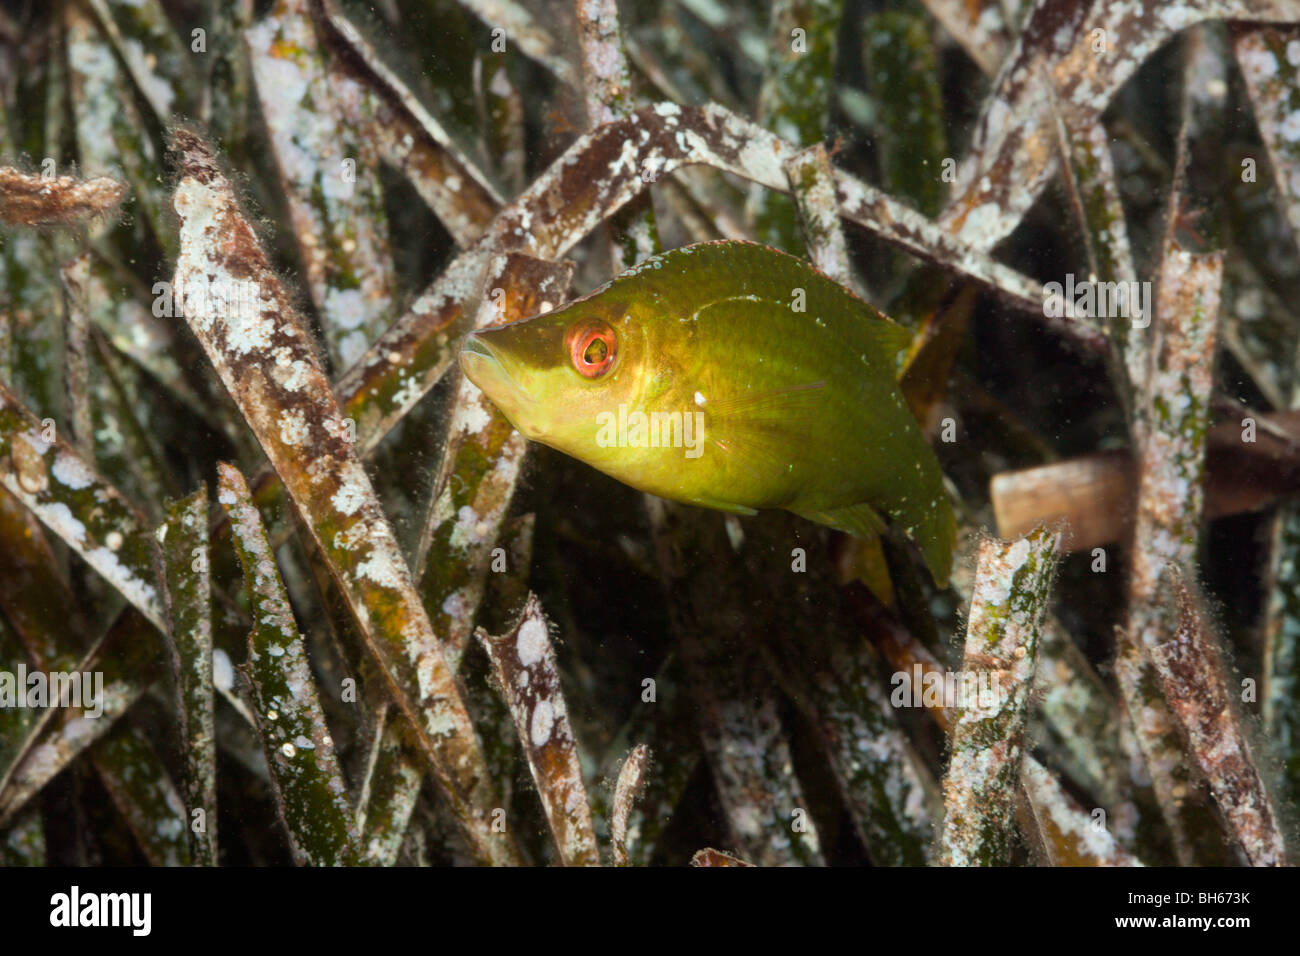 Long-snouted Wrasse in Seaweed, Symphodus rostratus, Tamariu, Costa Brava, Mediterranean Sea, Spain Stock Photo